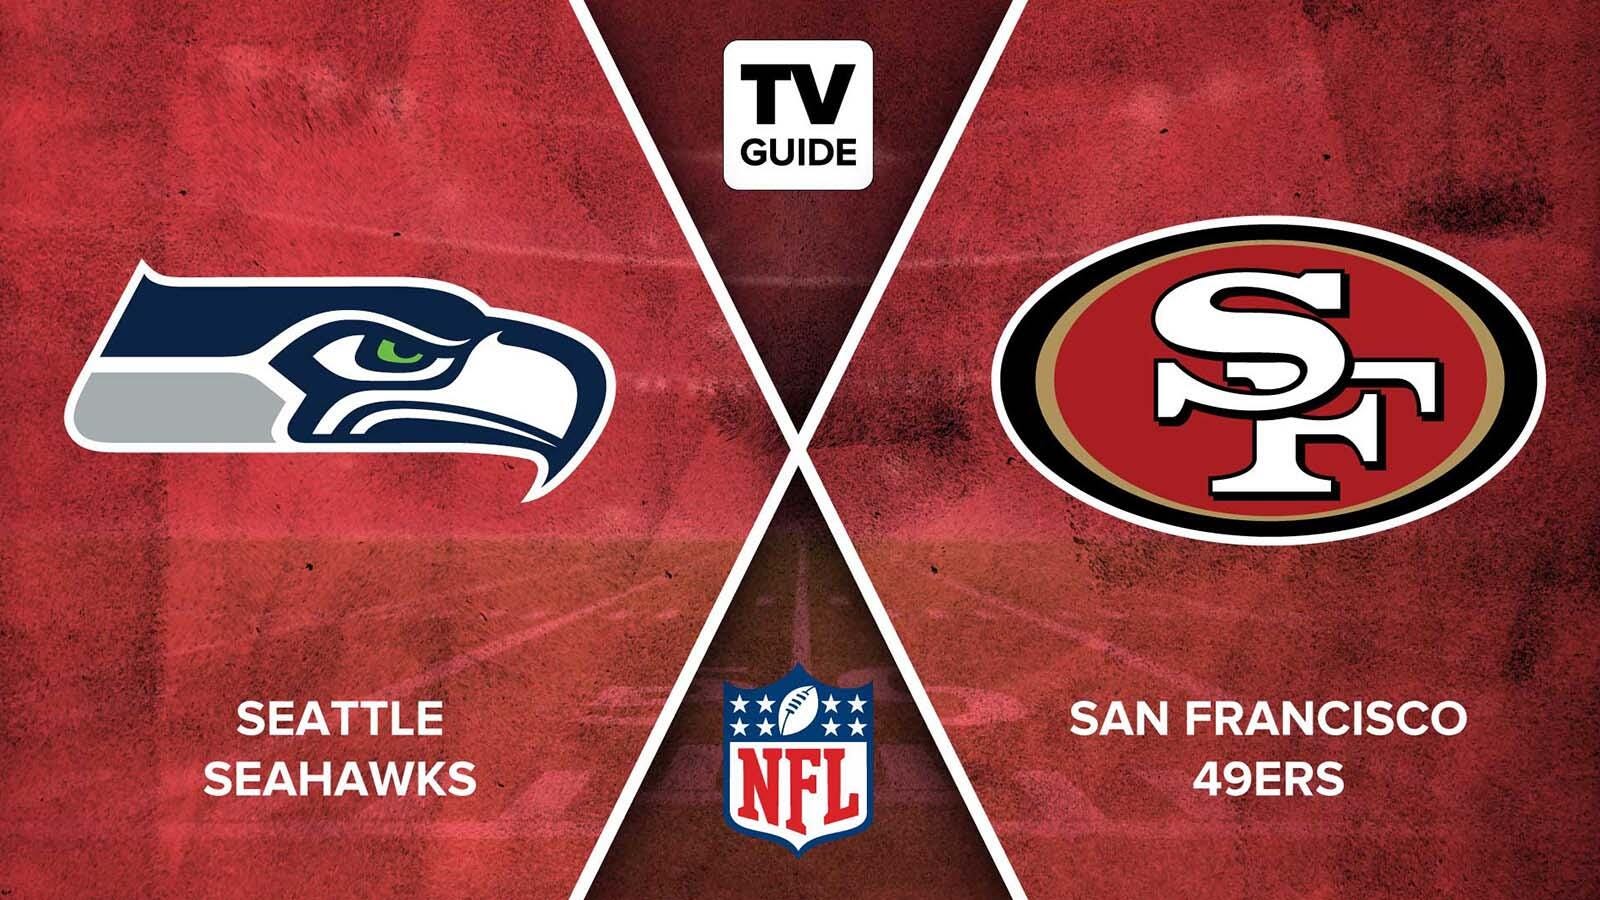 49ers vs seahawks playoffs